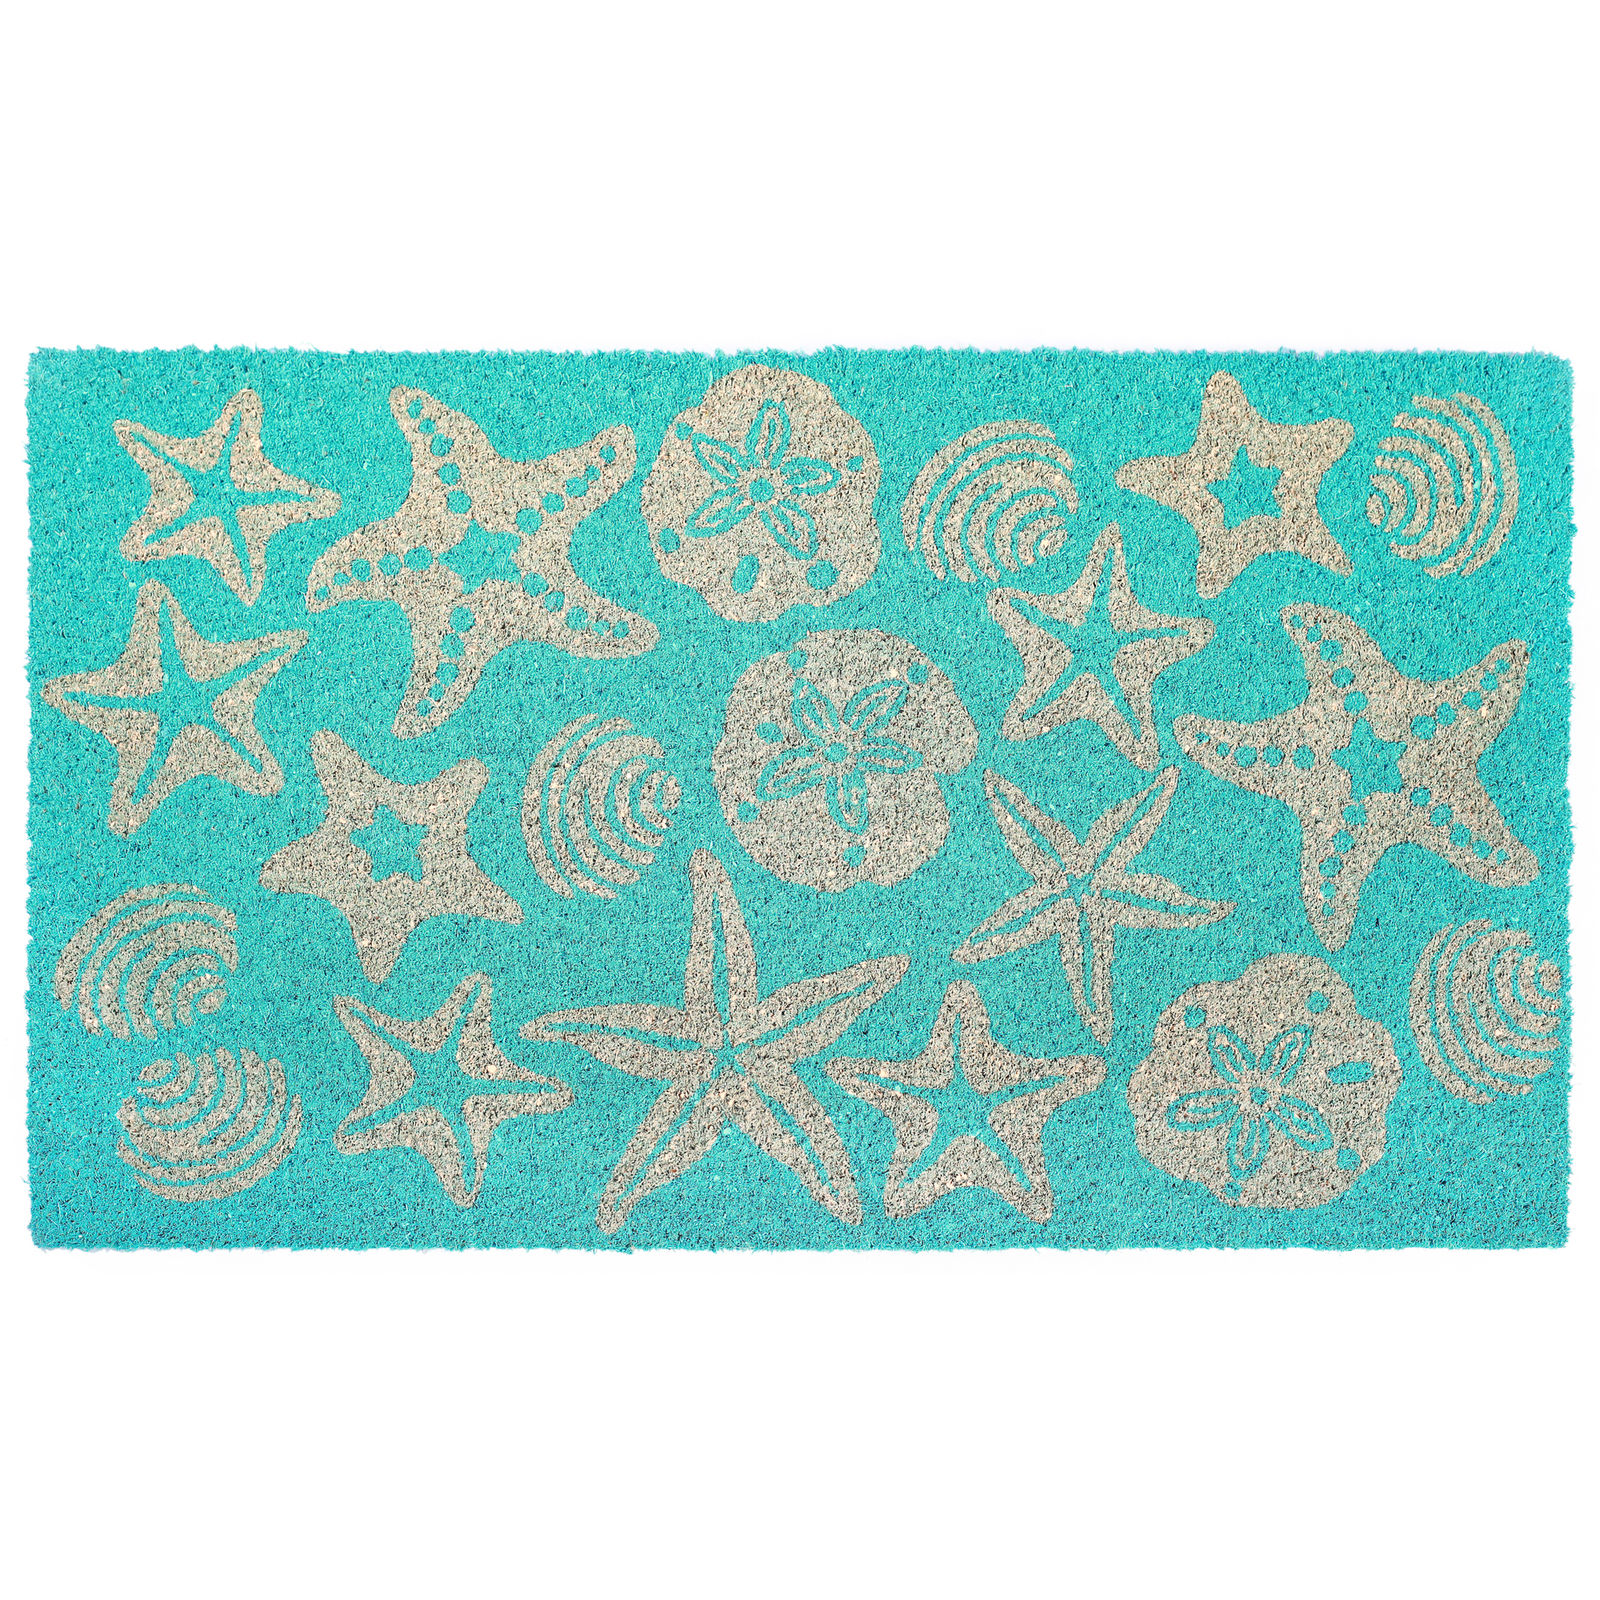 Shell Starfish Sand Dollar Coir Door Mat Aqua